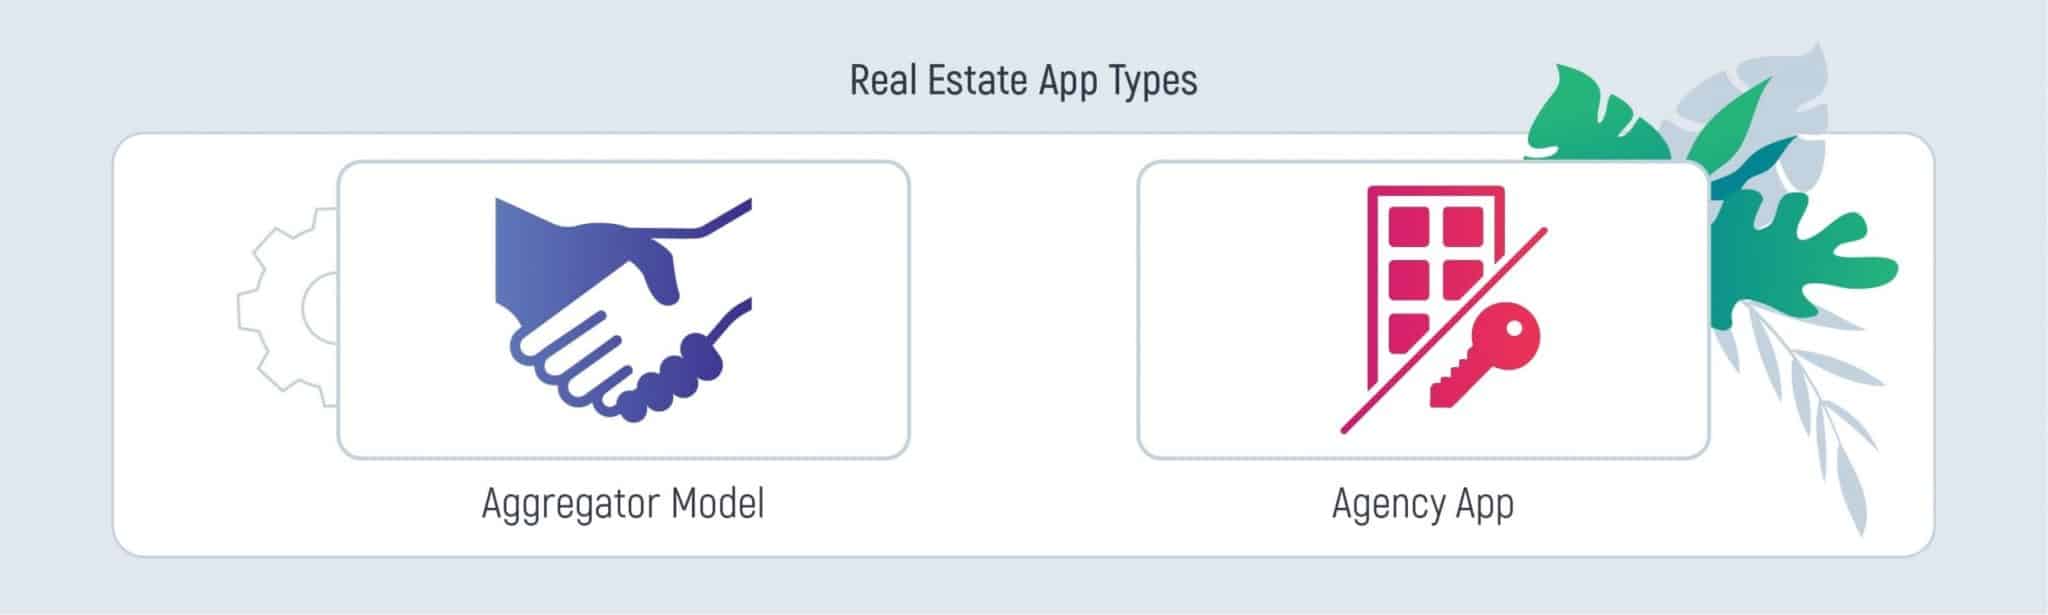 Real Estate Mobile App Development Guide: 4 Steps to Make the Best App